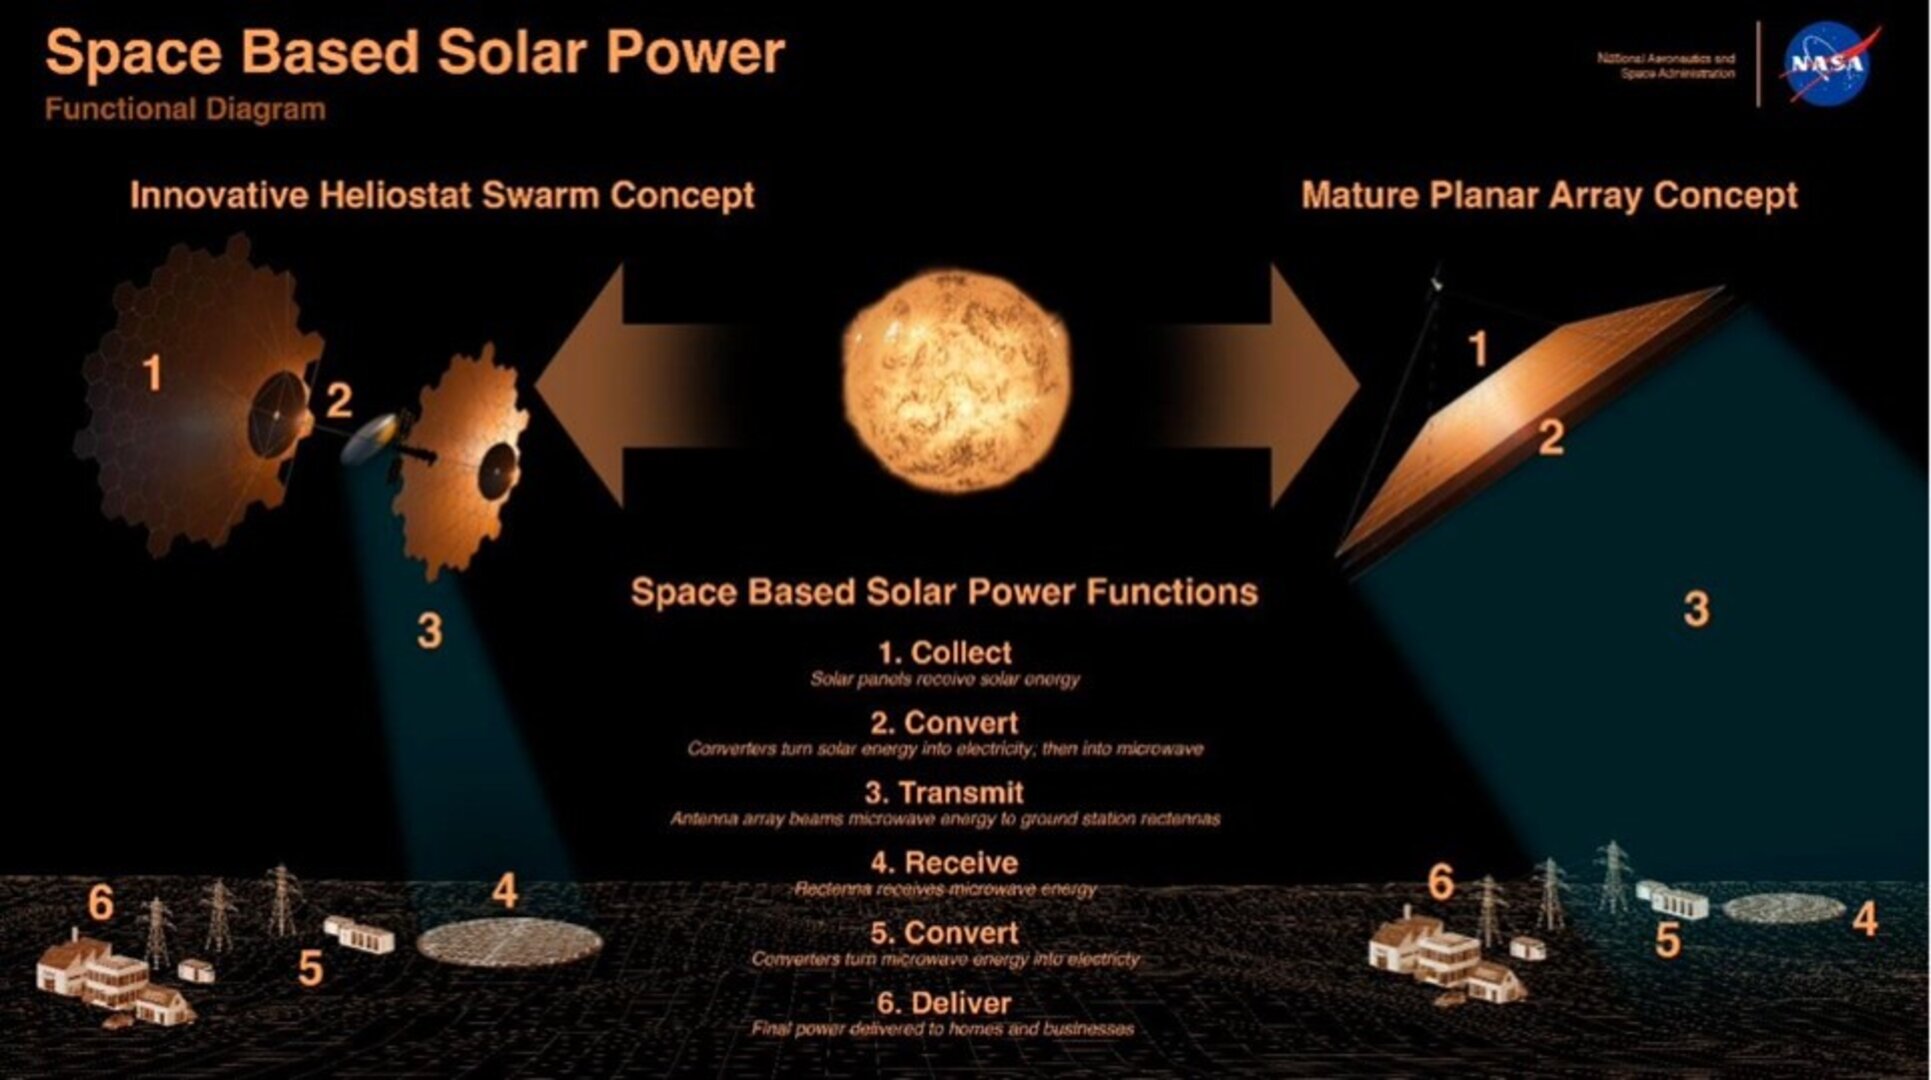 Space Based Solar Power functional diagram